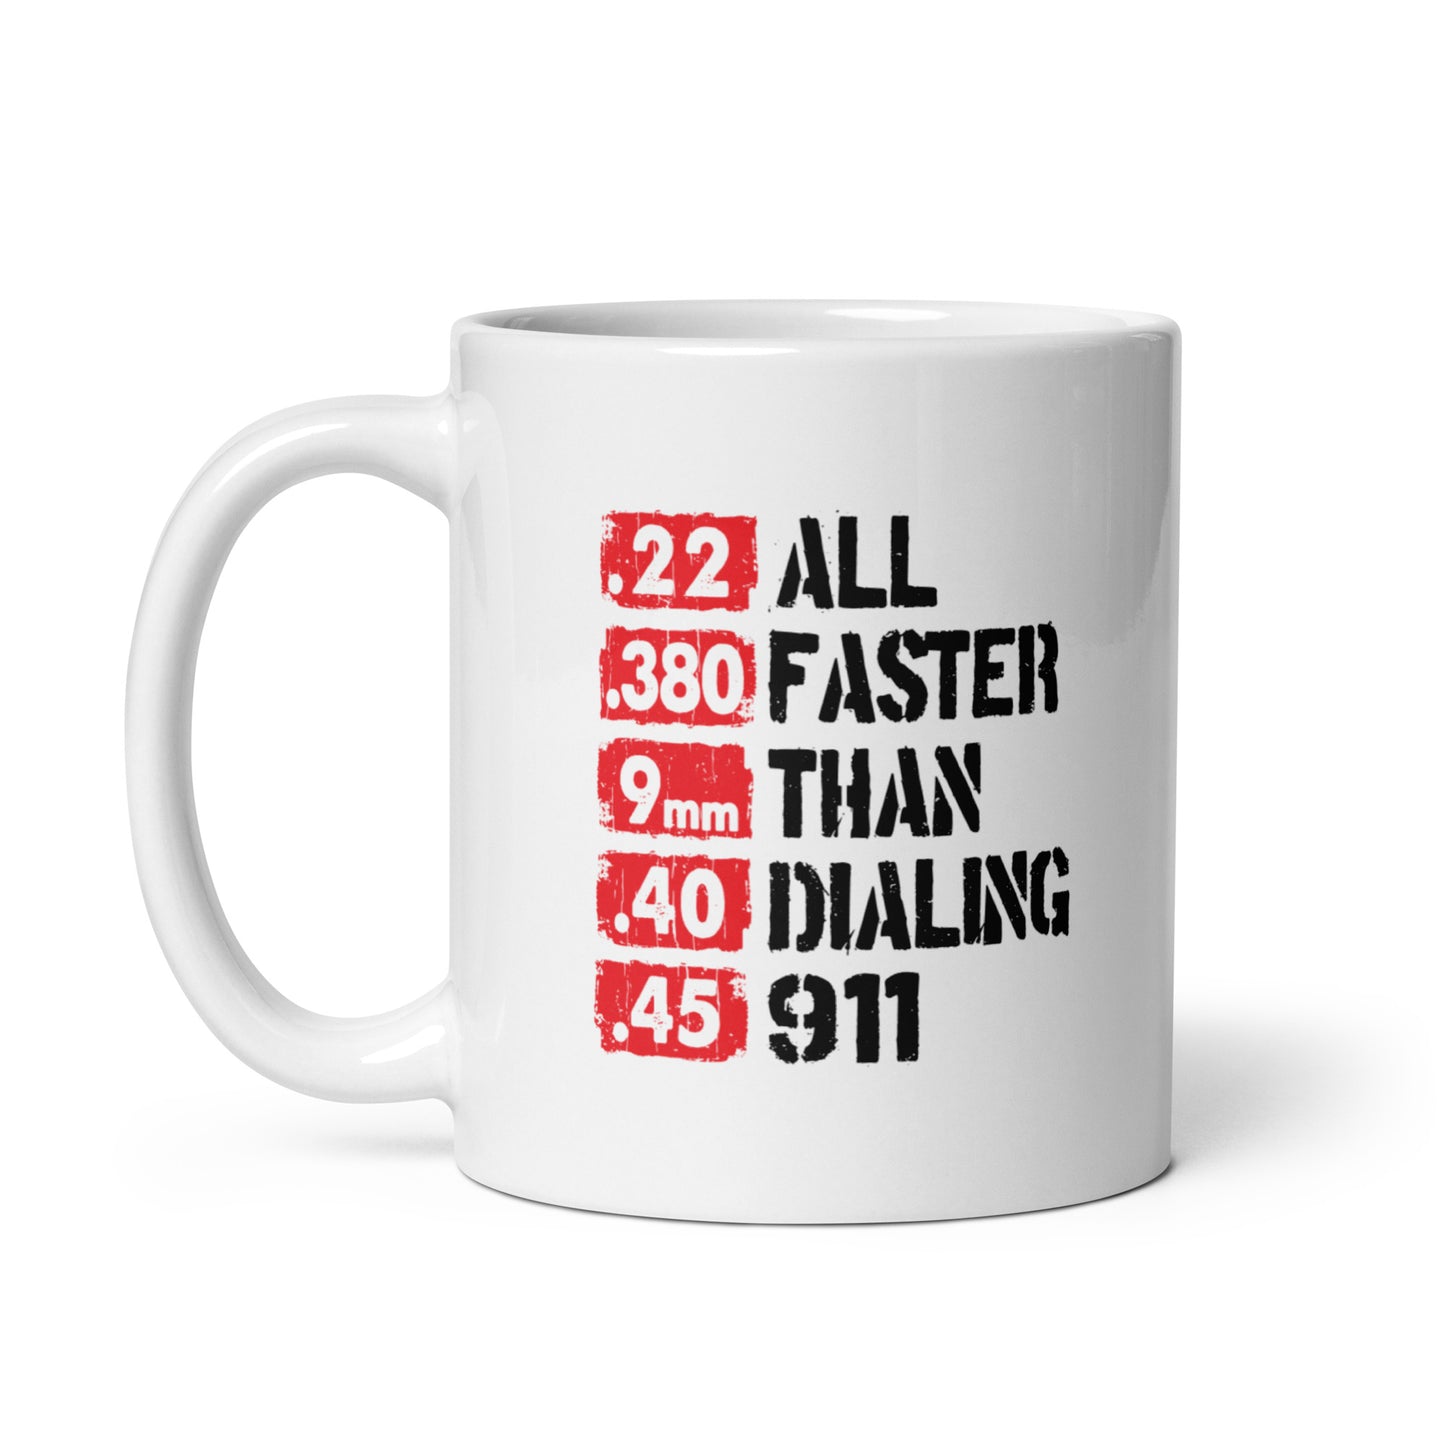 All Faster Than 911 White glossy mug